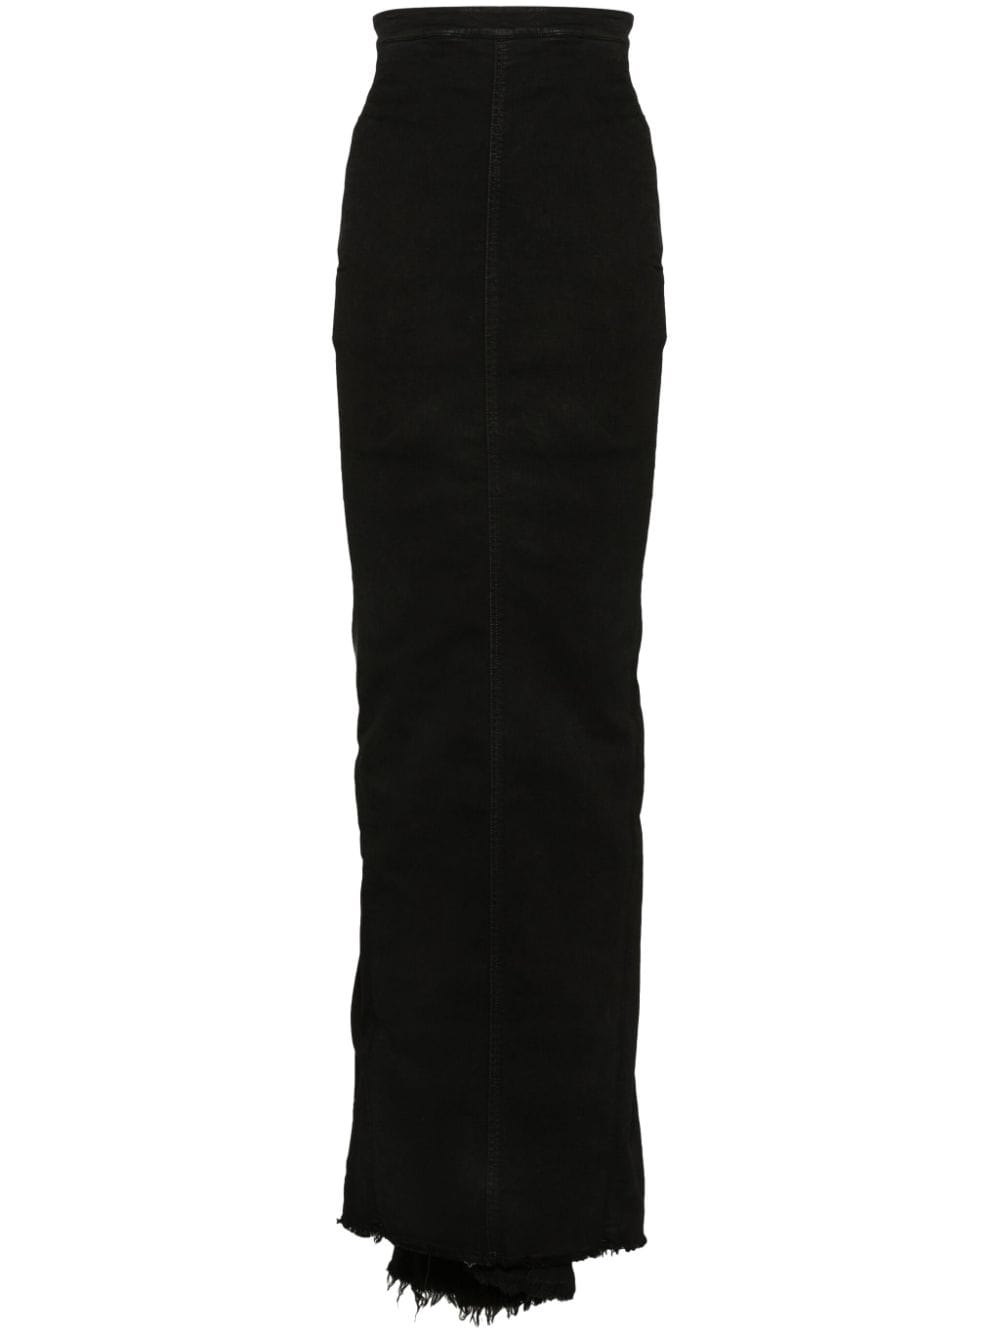 RICK OWENS Black High Waist Long Denim Skirt for Women with Frayed Hem and Demi-Train